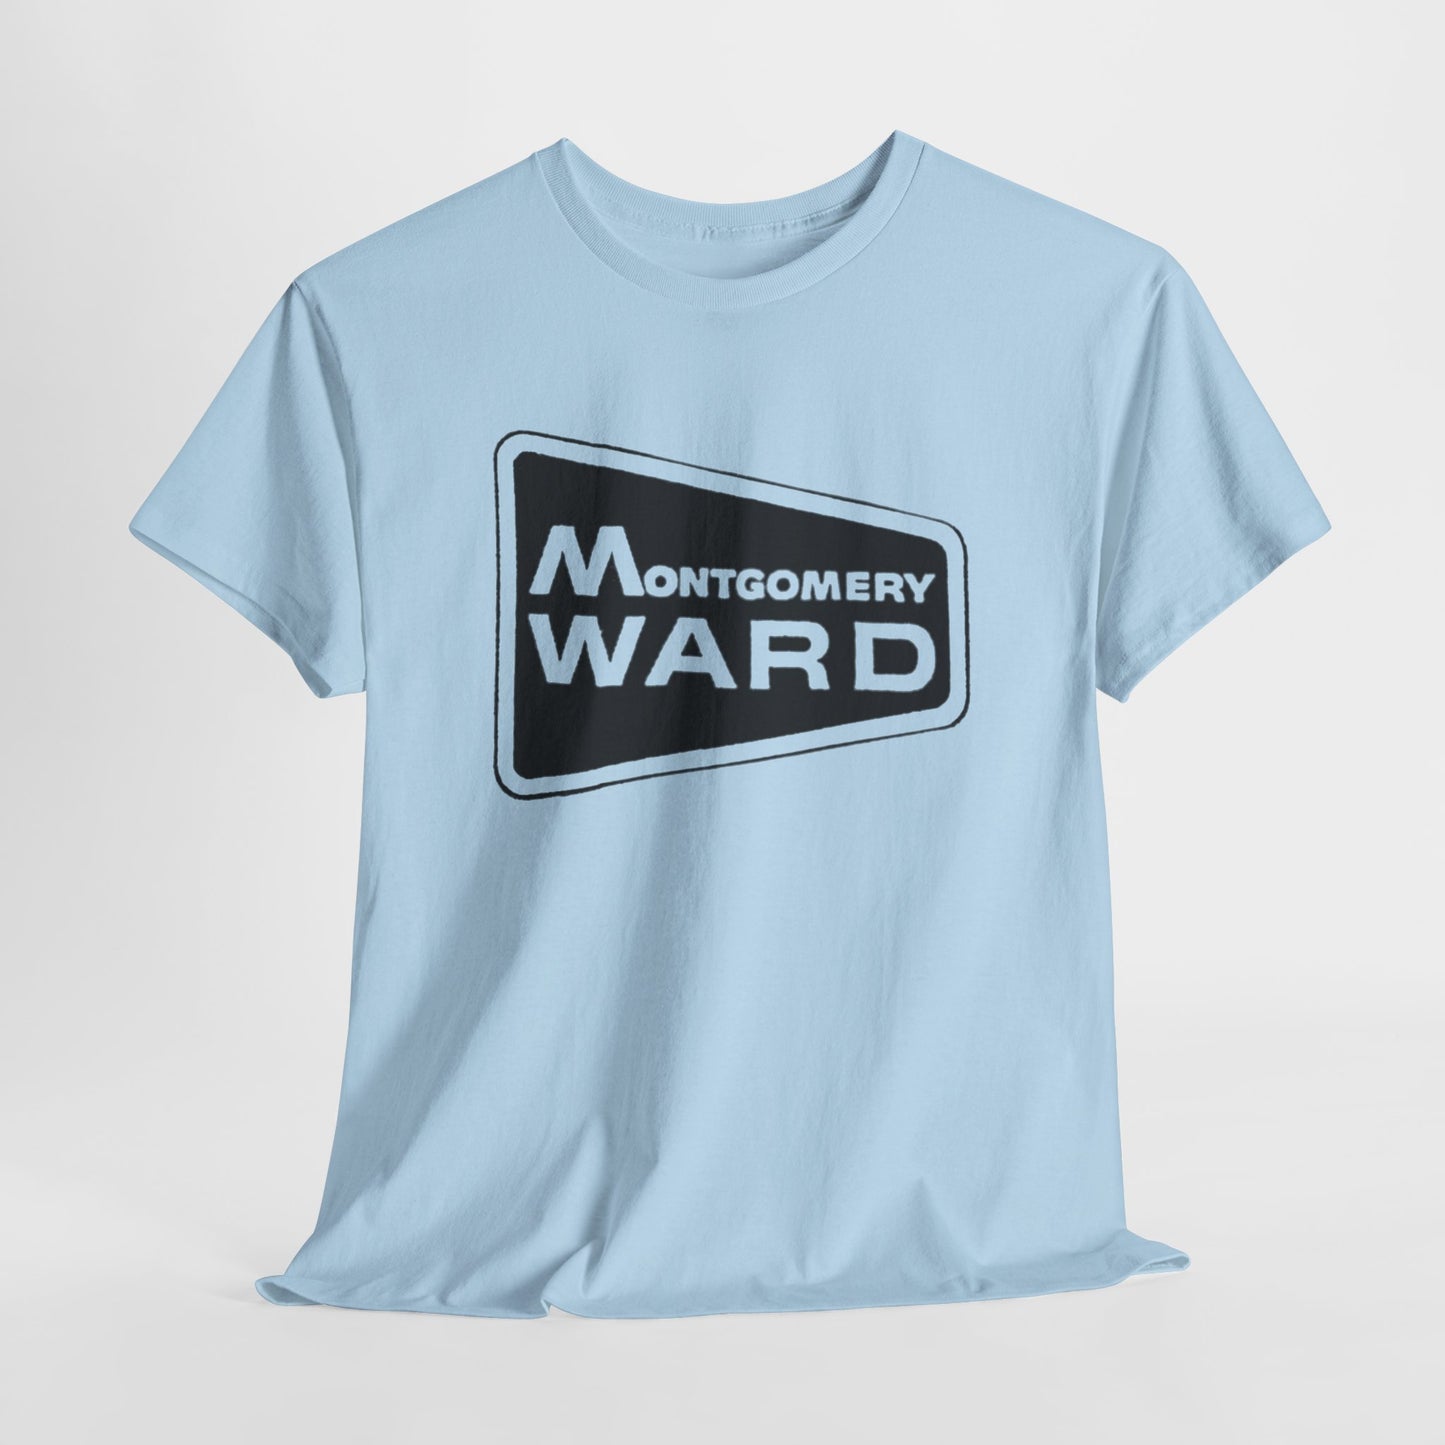 Retro Tee #64: Montgomery Ward